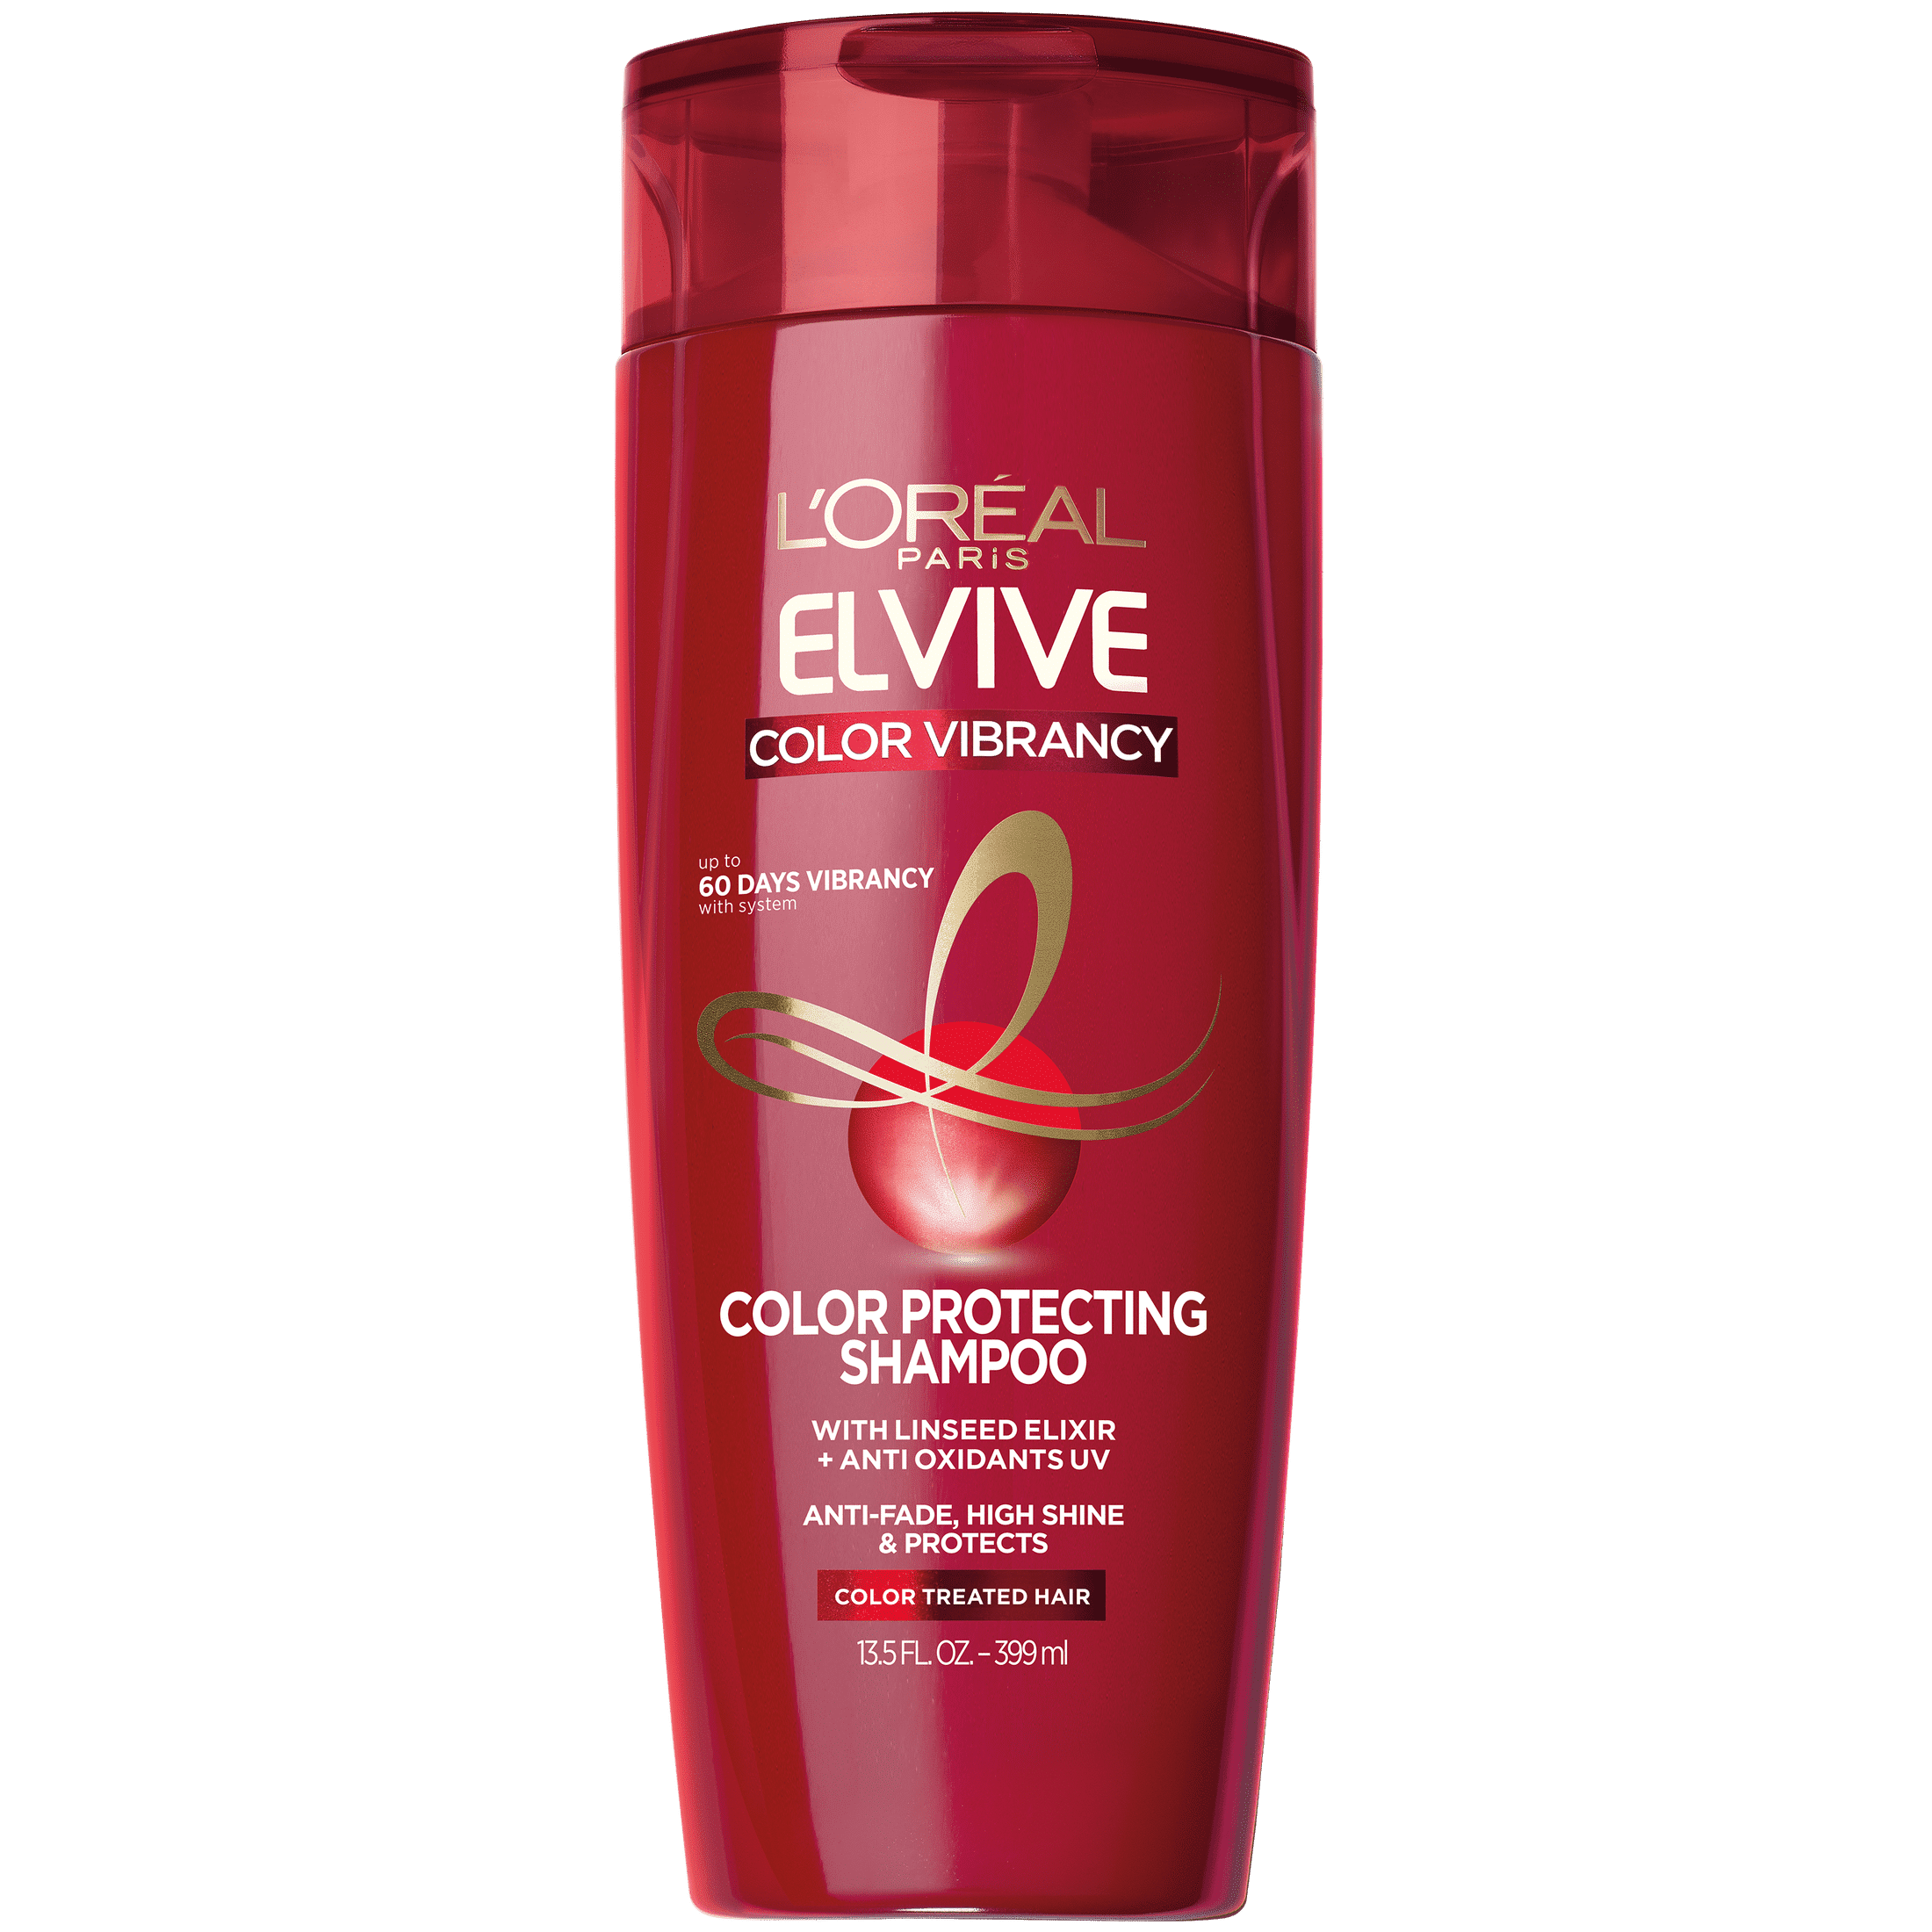 L'Oréal Elvive champú 250 ml. Arcilla extraordinaria cabellos grasos. -  Tarraco Import Export